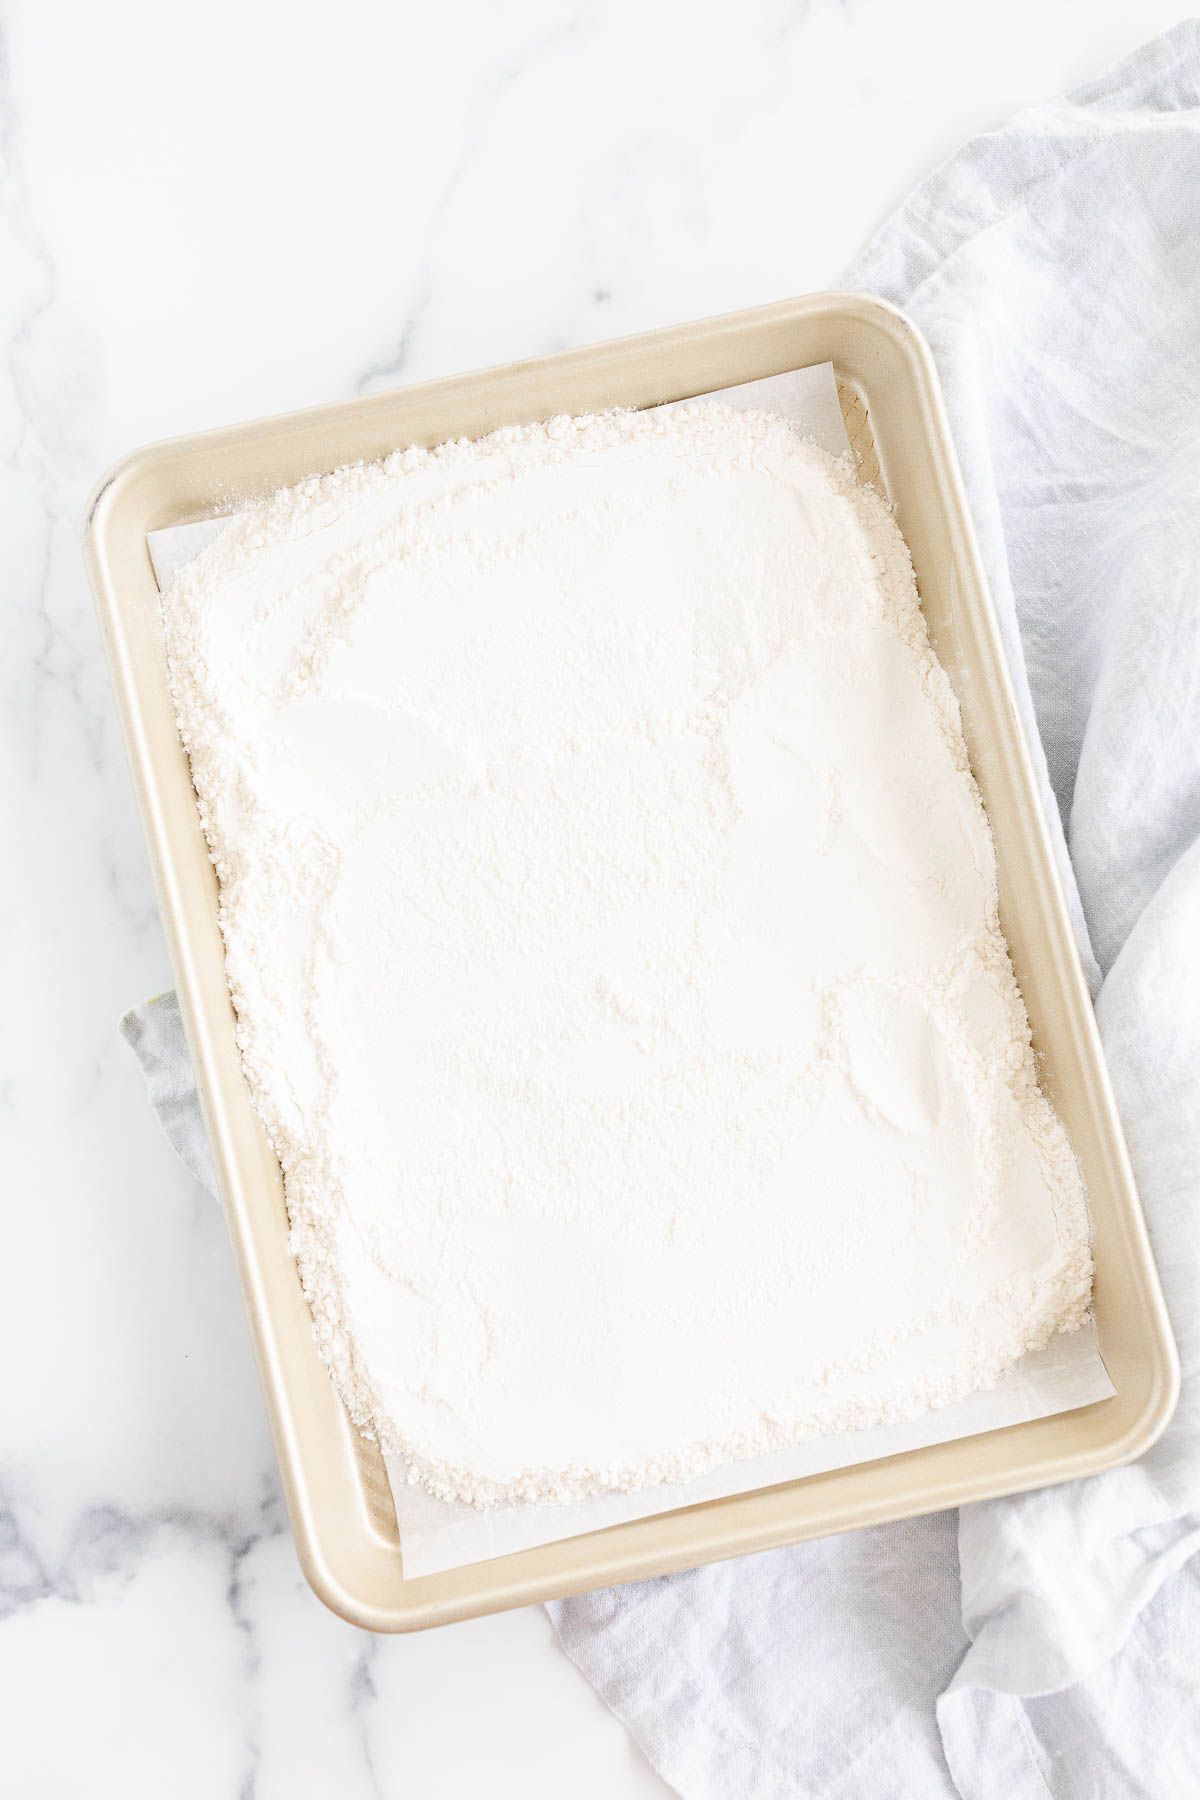 How to Heat Treat Flour